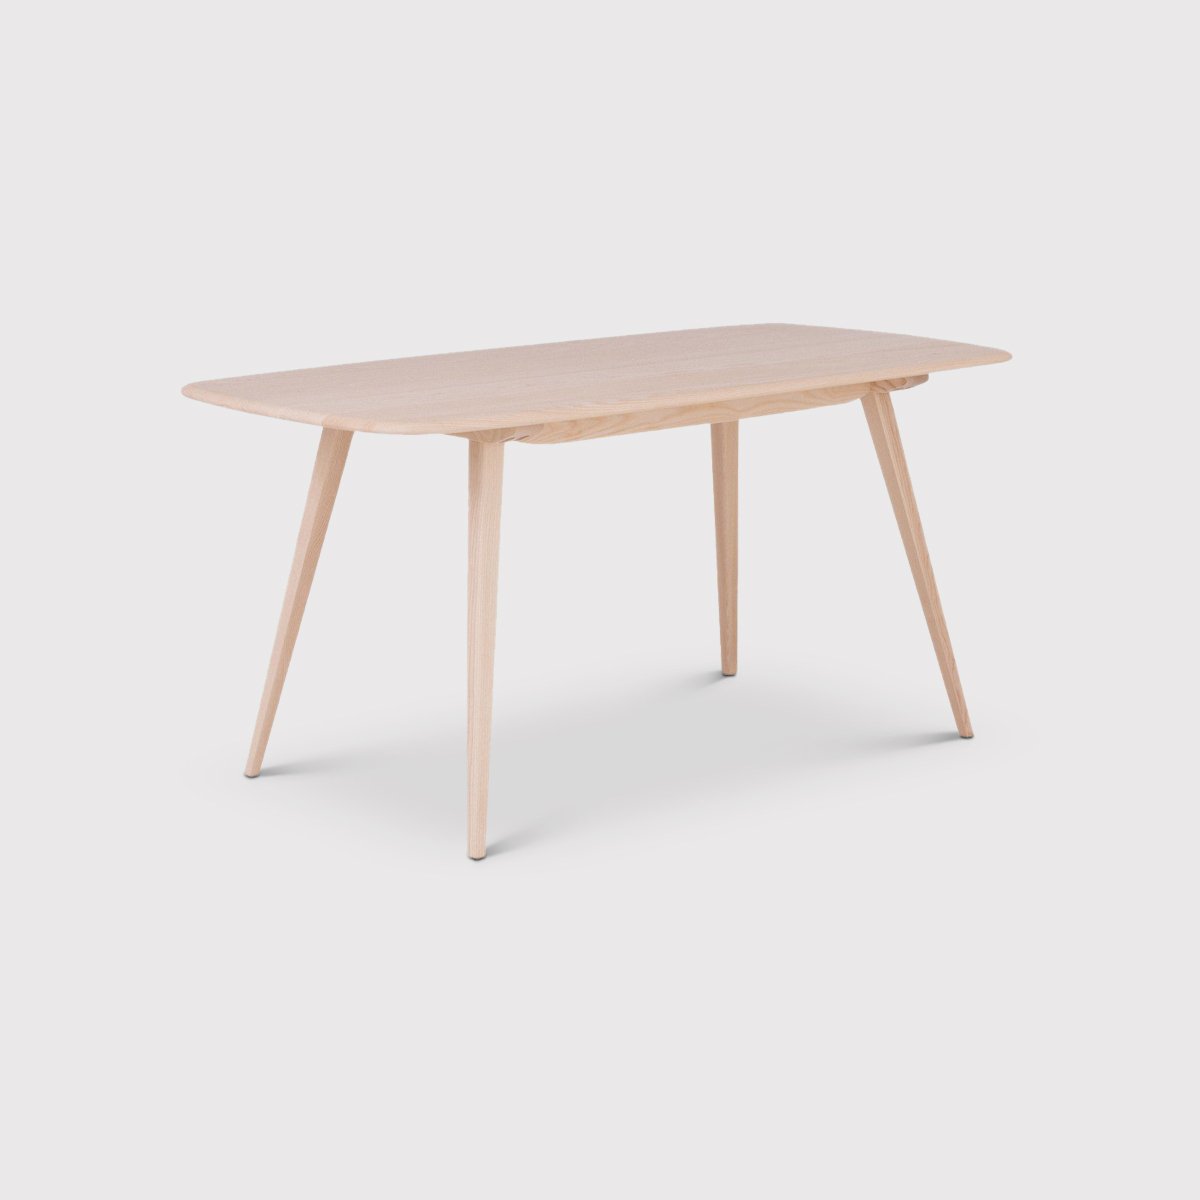 L.Ercolani Plank Table, Neutral Wood | Barker & Stonehouse